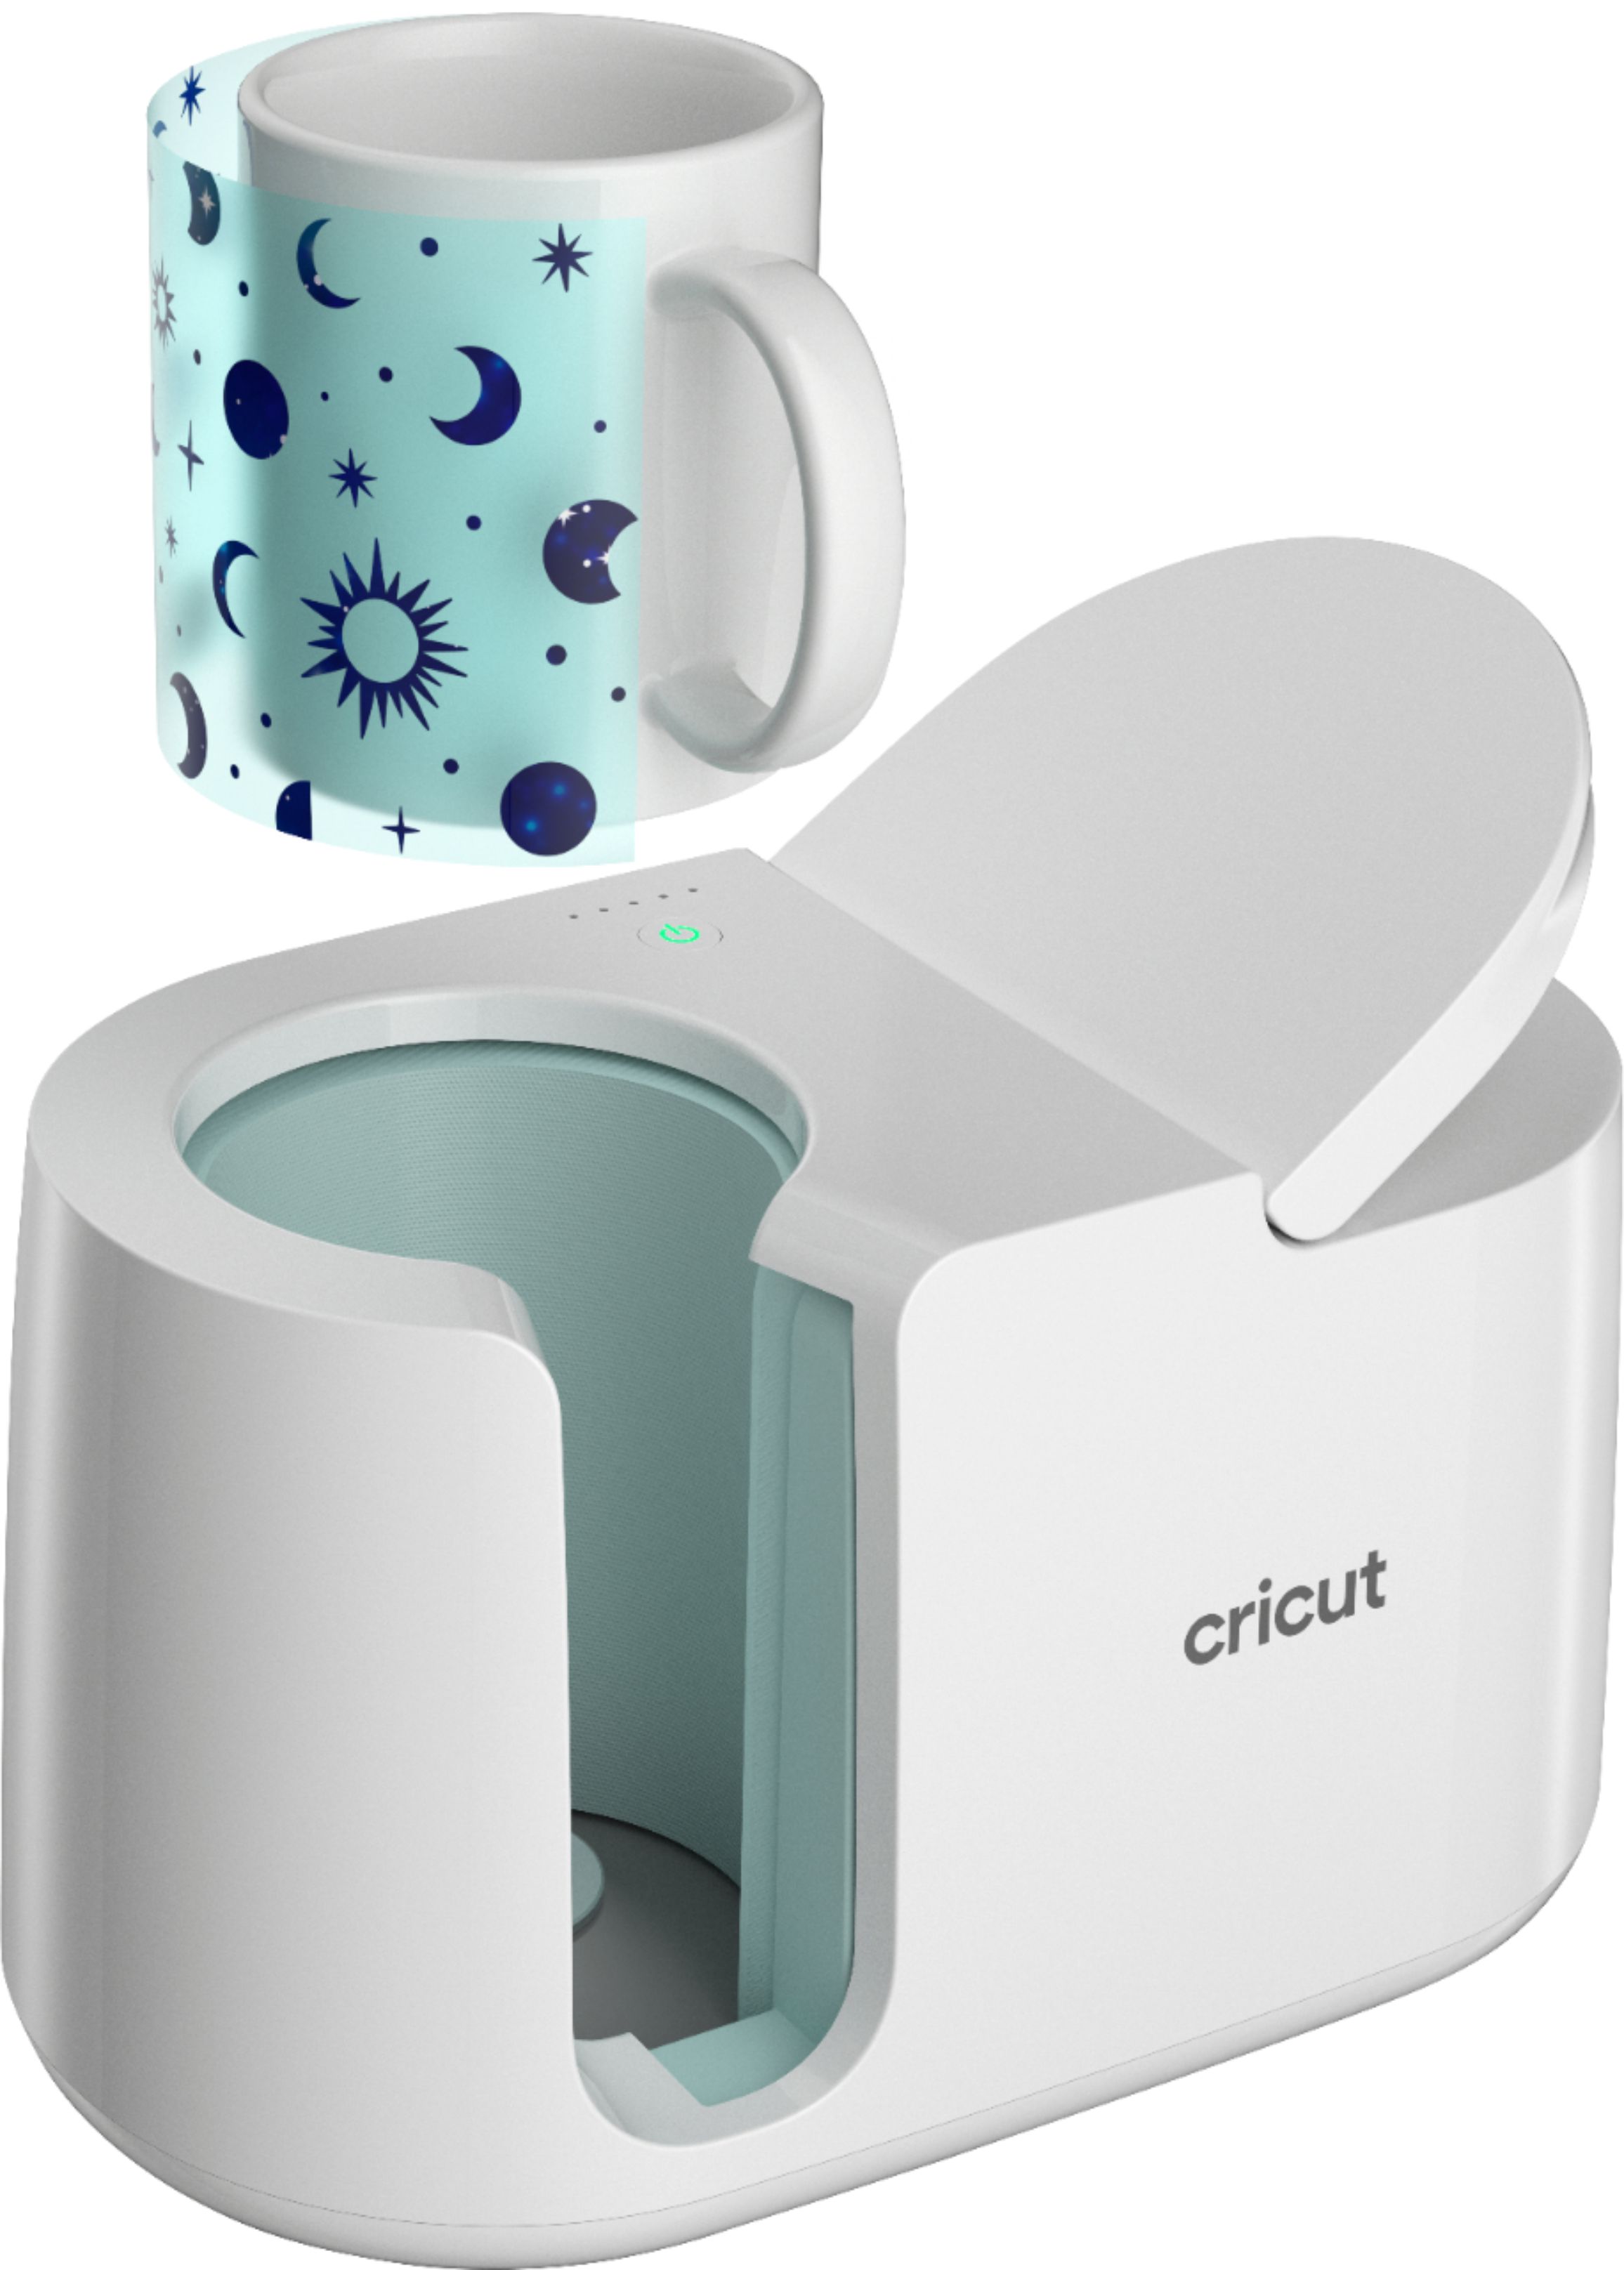 Cricut Mug Press with Mug Blanks, Heat Resistant Tape, Markers, and Distressed Print Transfer Sheets Bundle, White